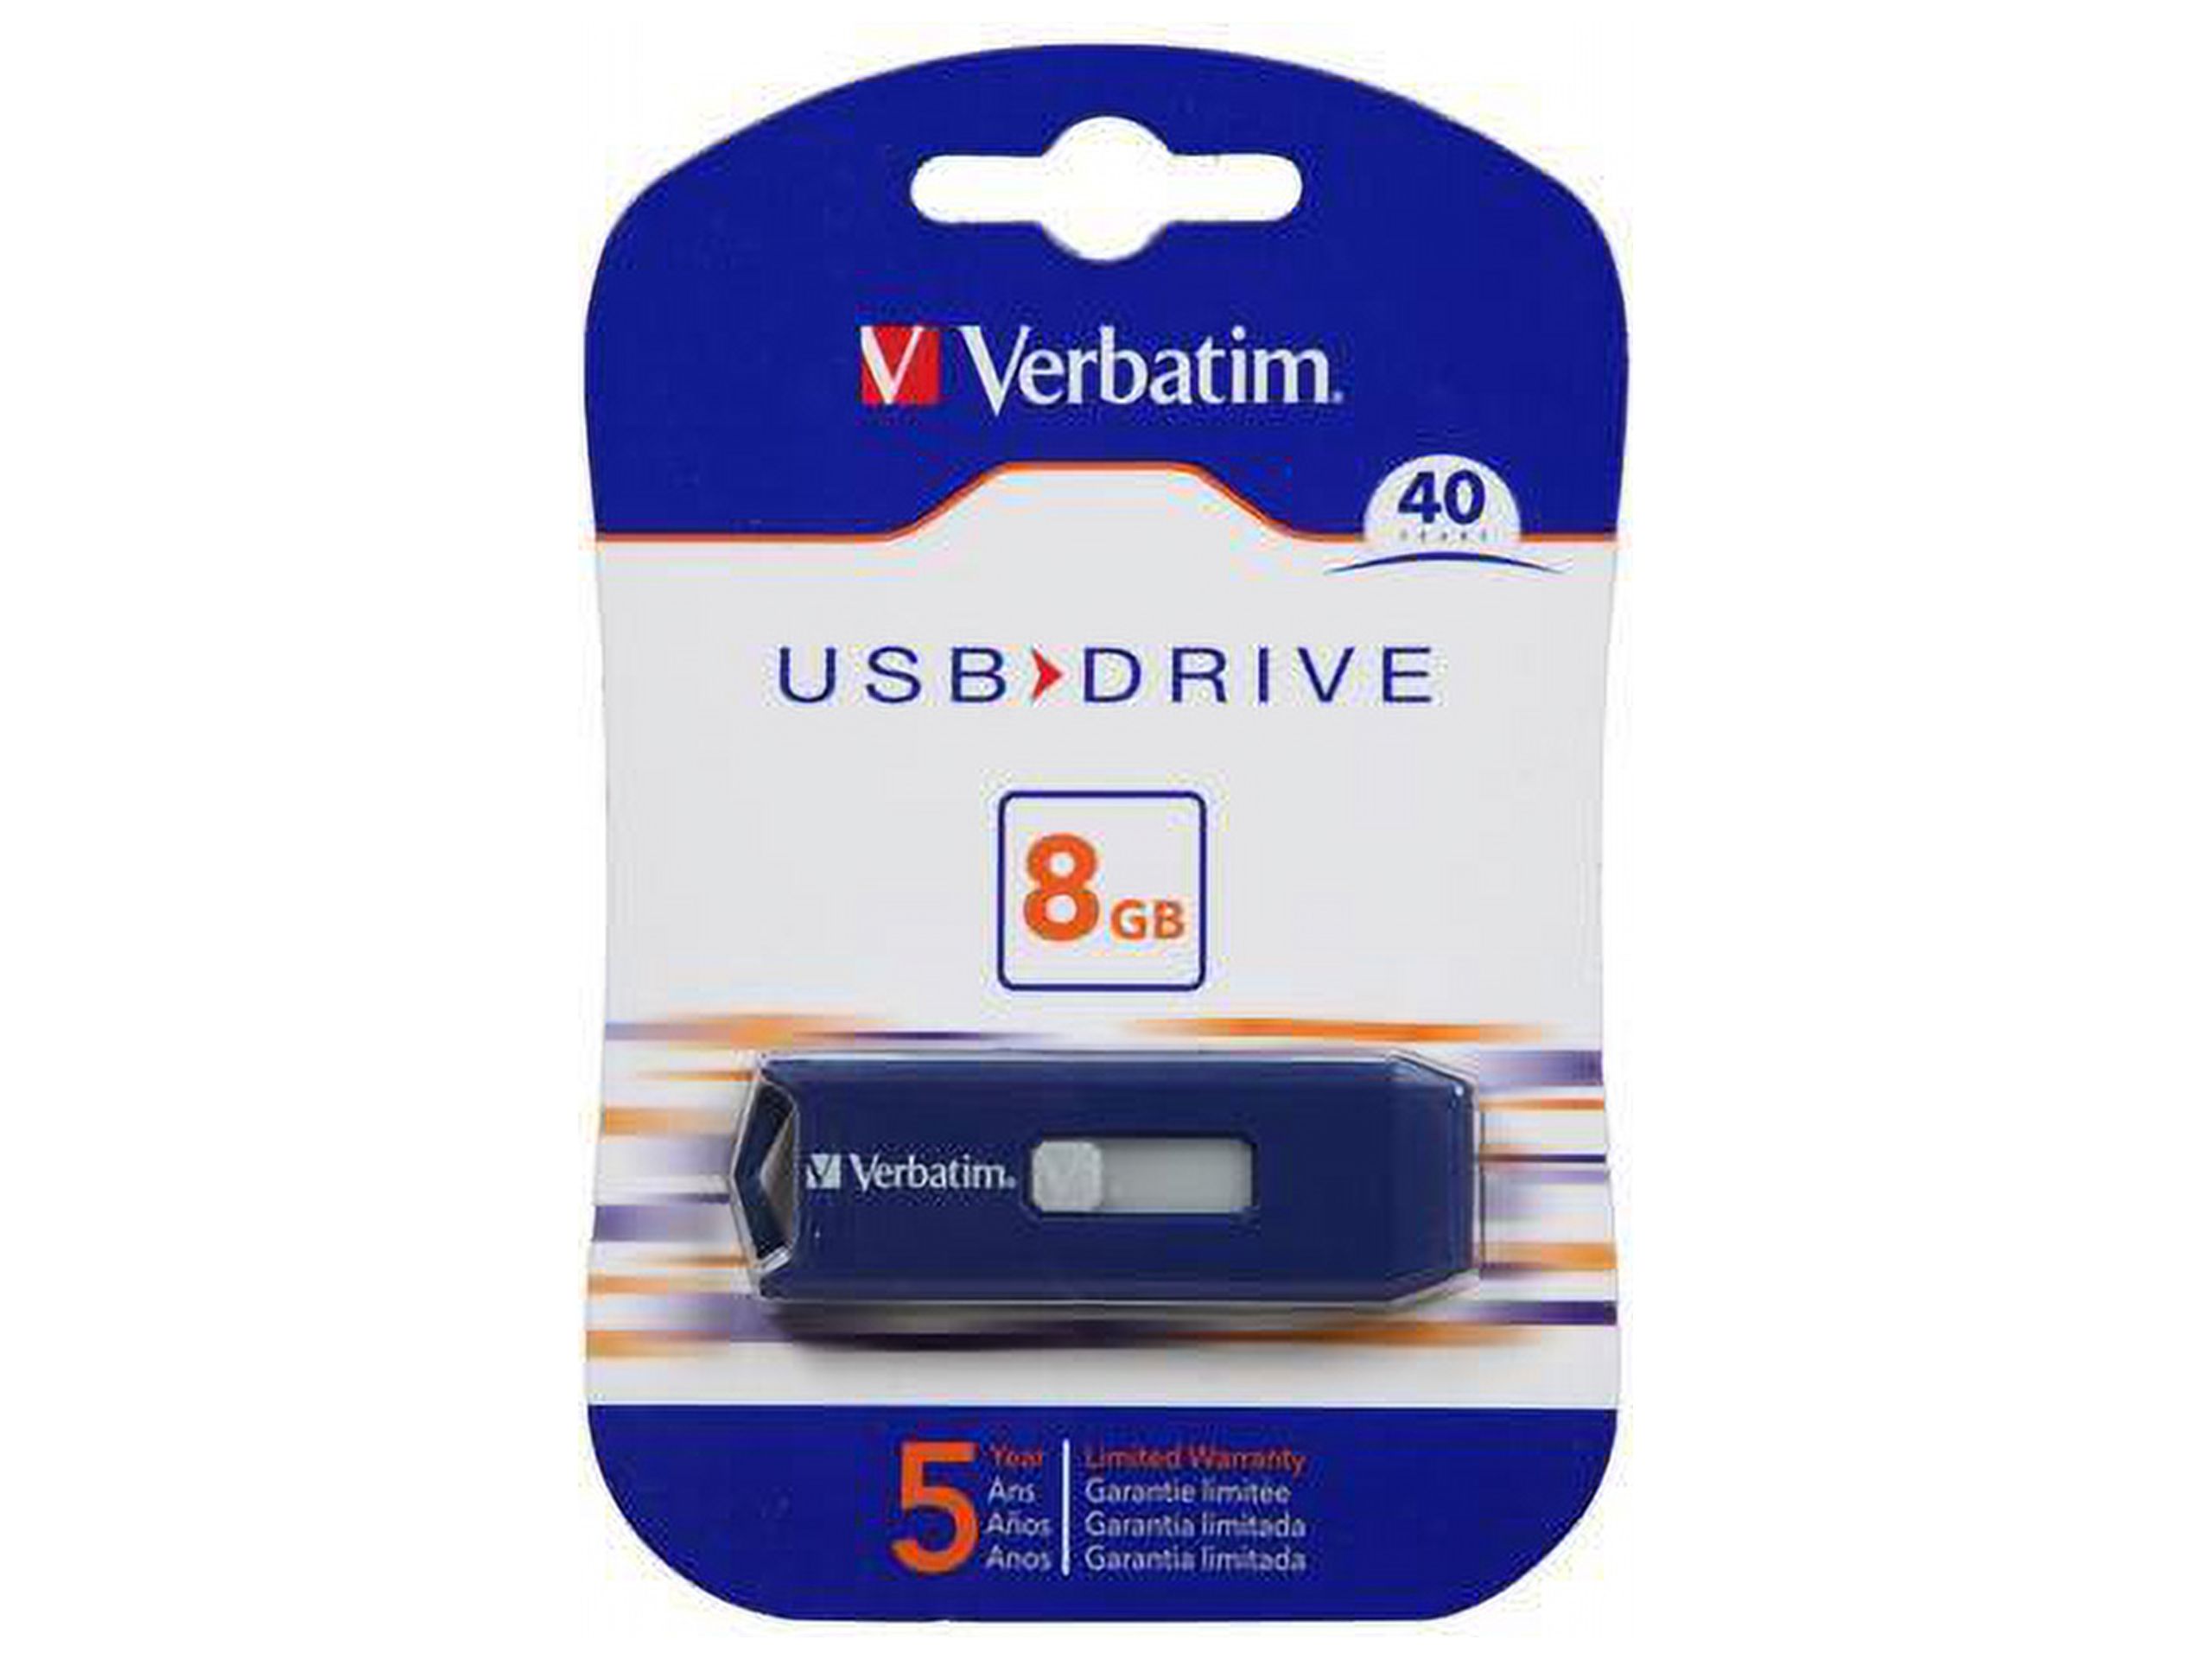 Verbatim Smart 8GB USB 2.0 Flash Drive Model 97088 - image 4 of 4